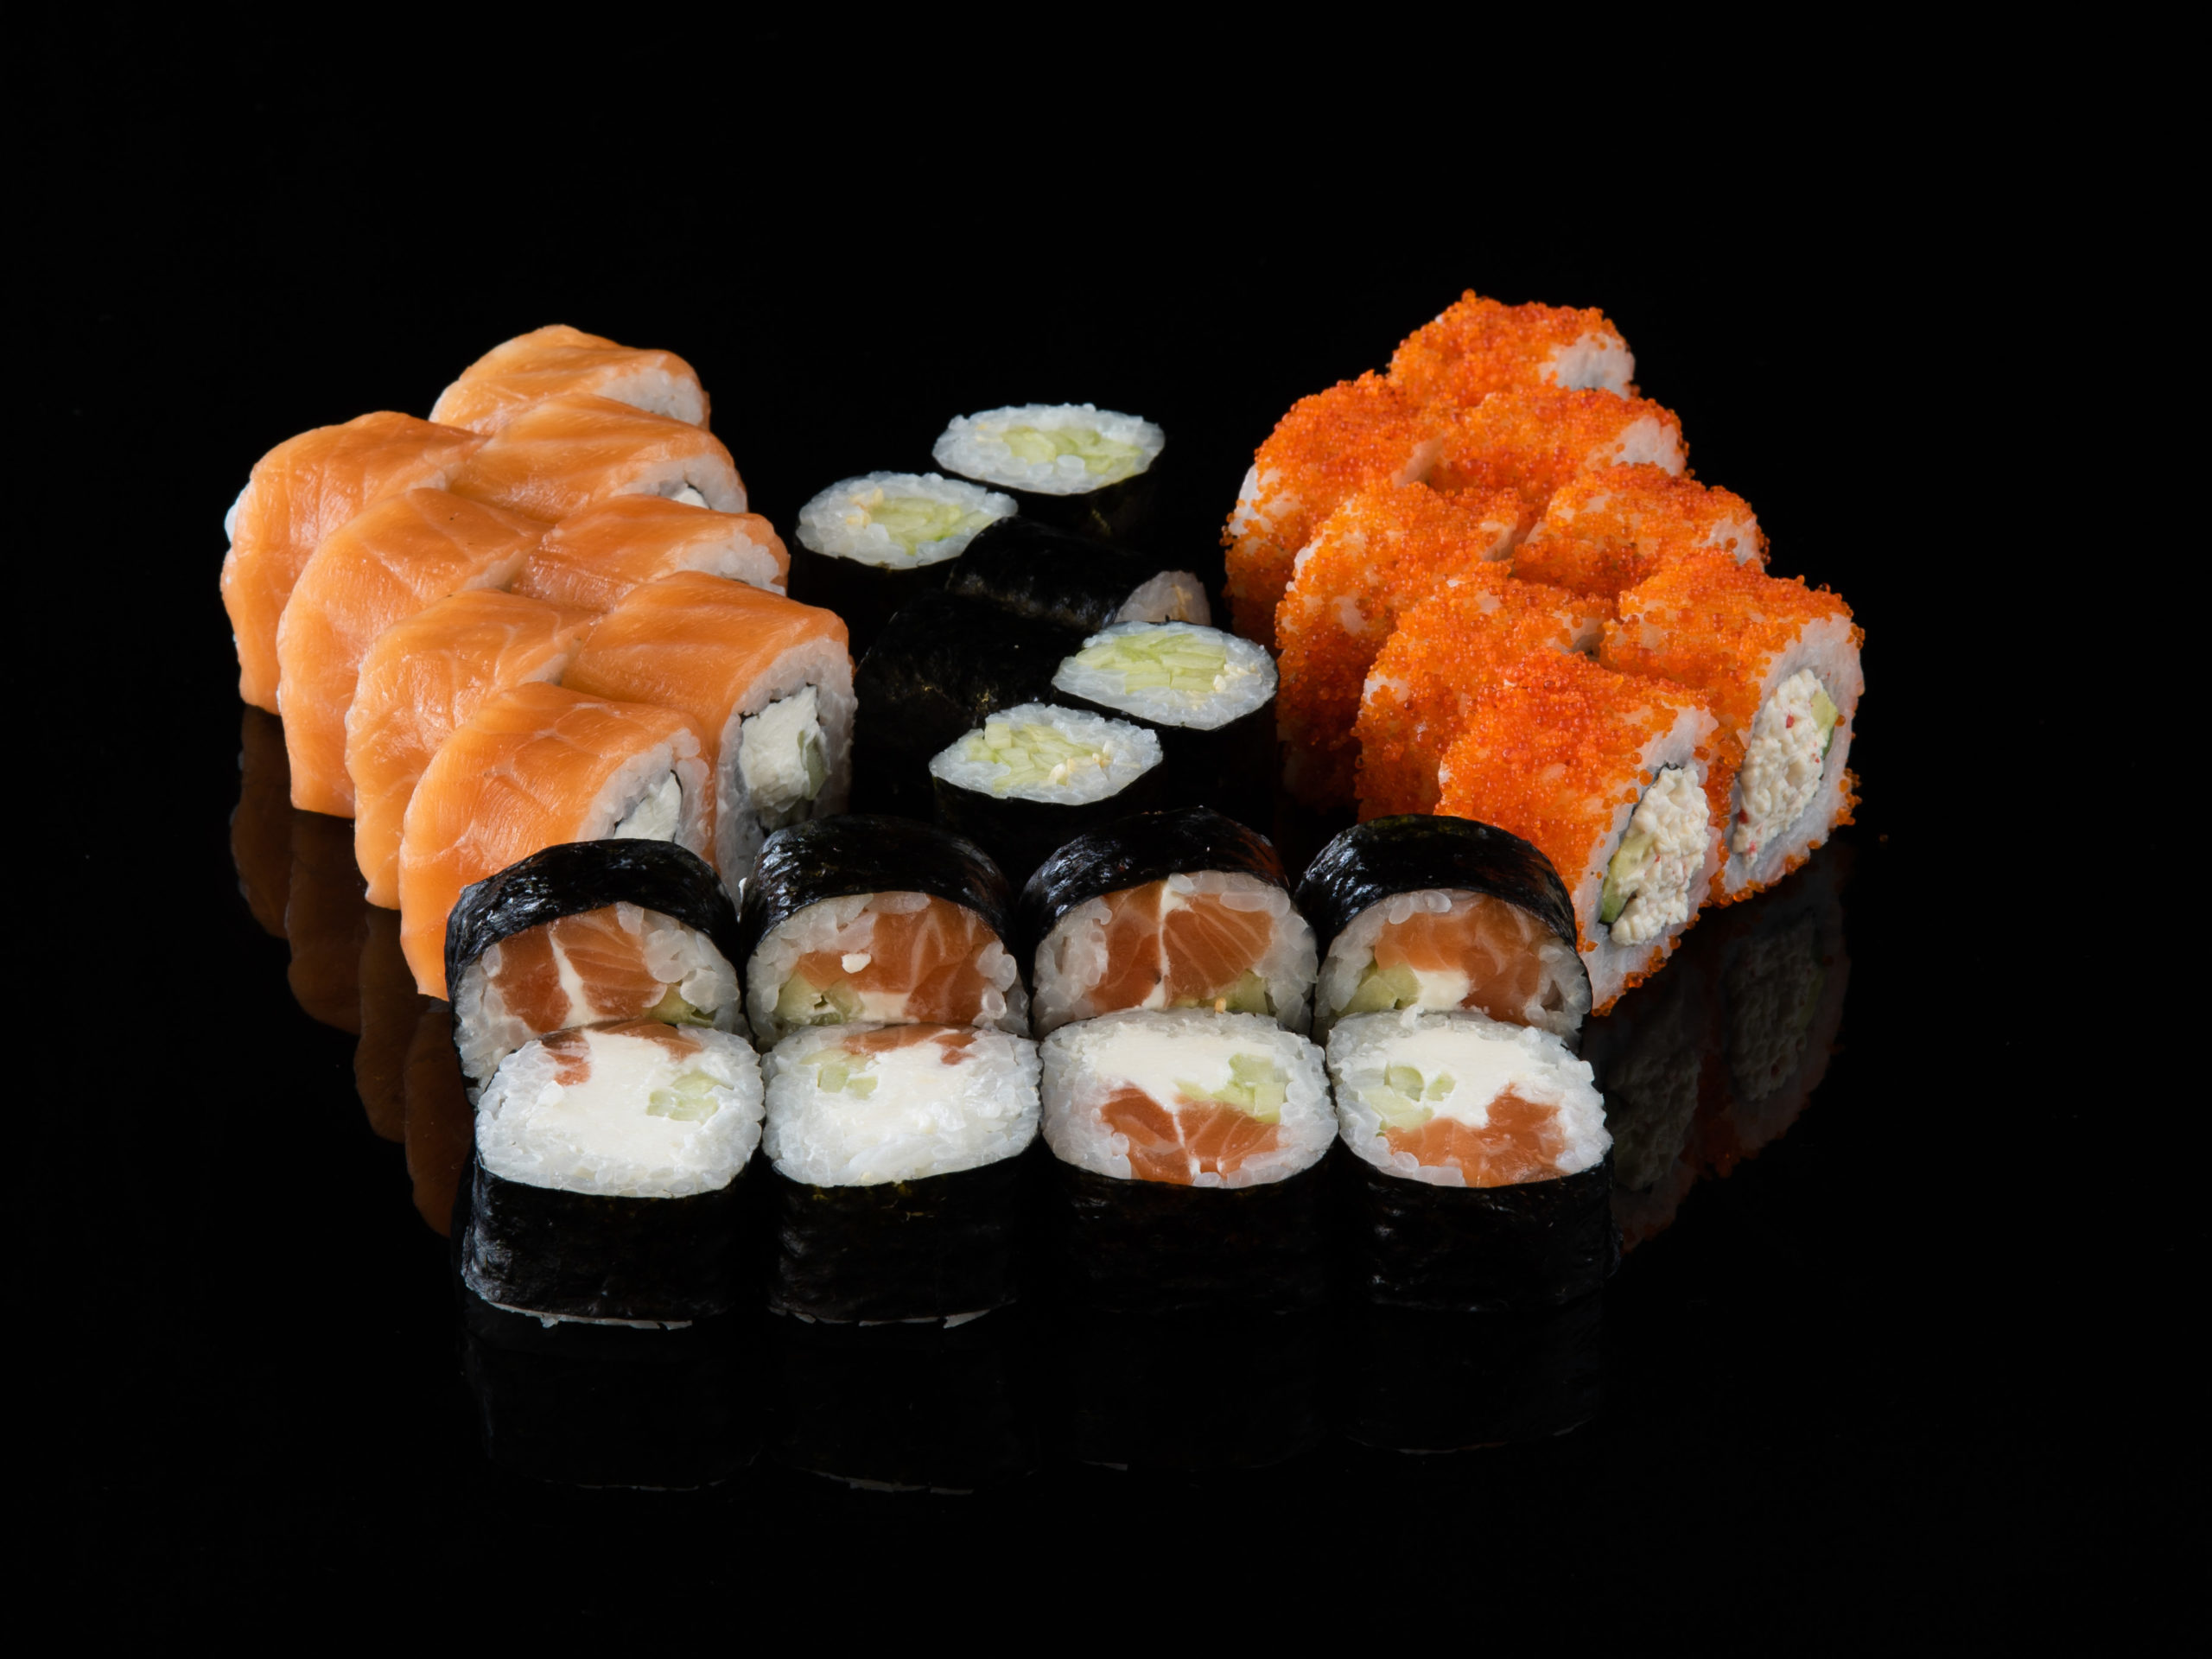 Заказать суши дешево и вкусно фото 108